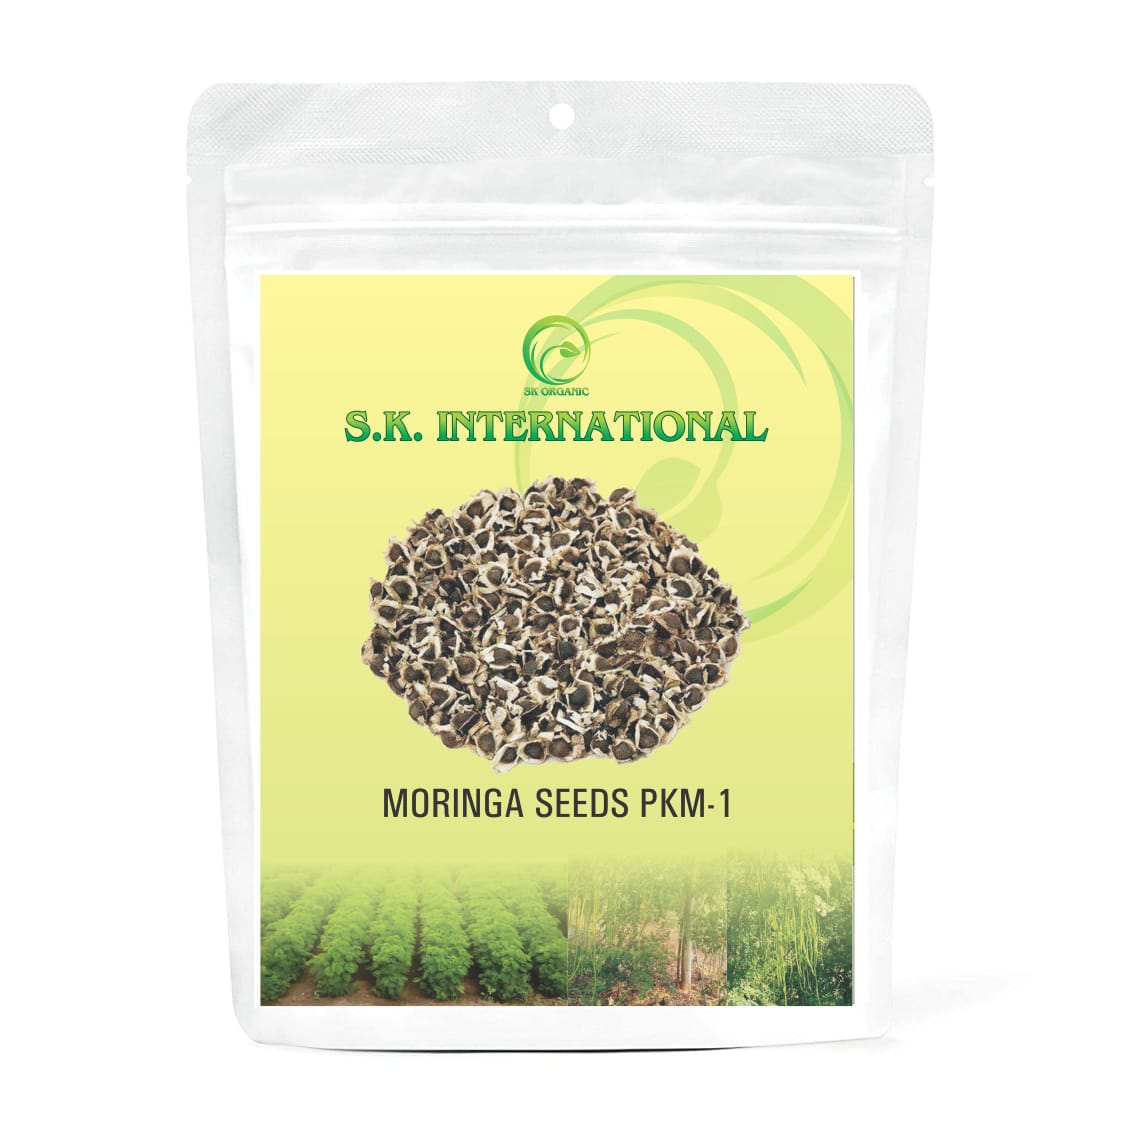  Moringa Seeds, Drumstick Seeds, Horseradish Tree Seeds, Saijan ki Phalli, Saragavo (100% Organic) with PKM1 with wings